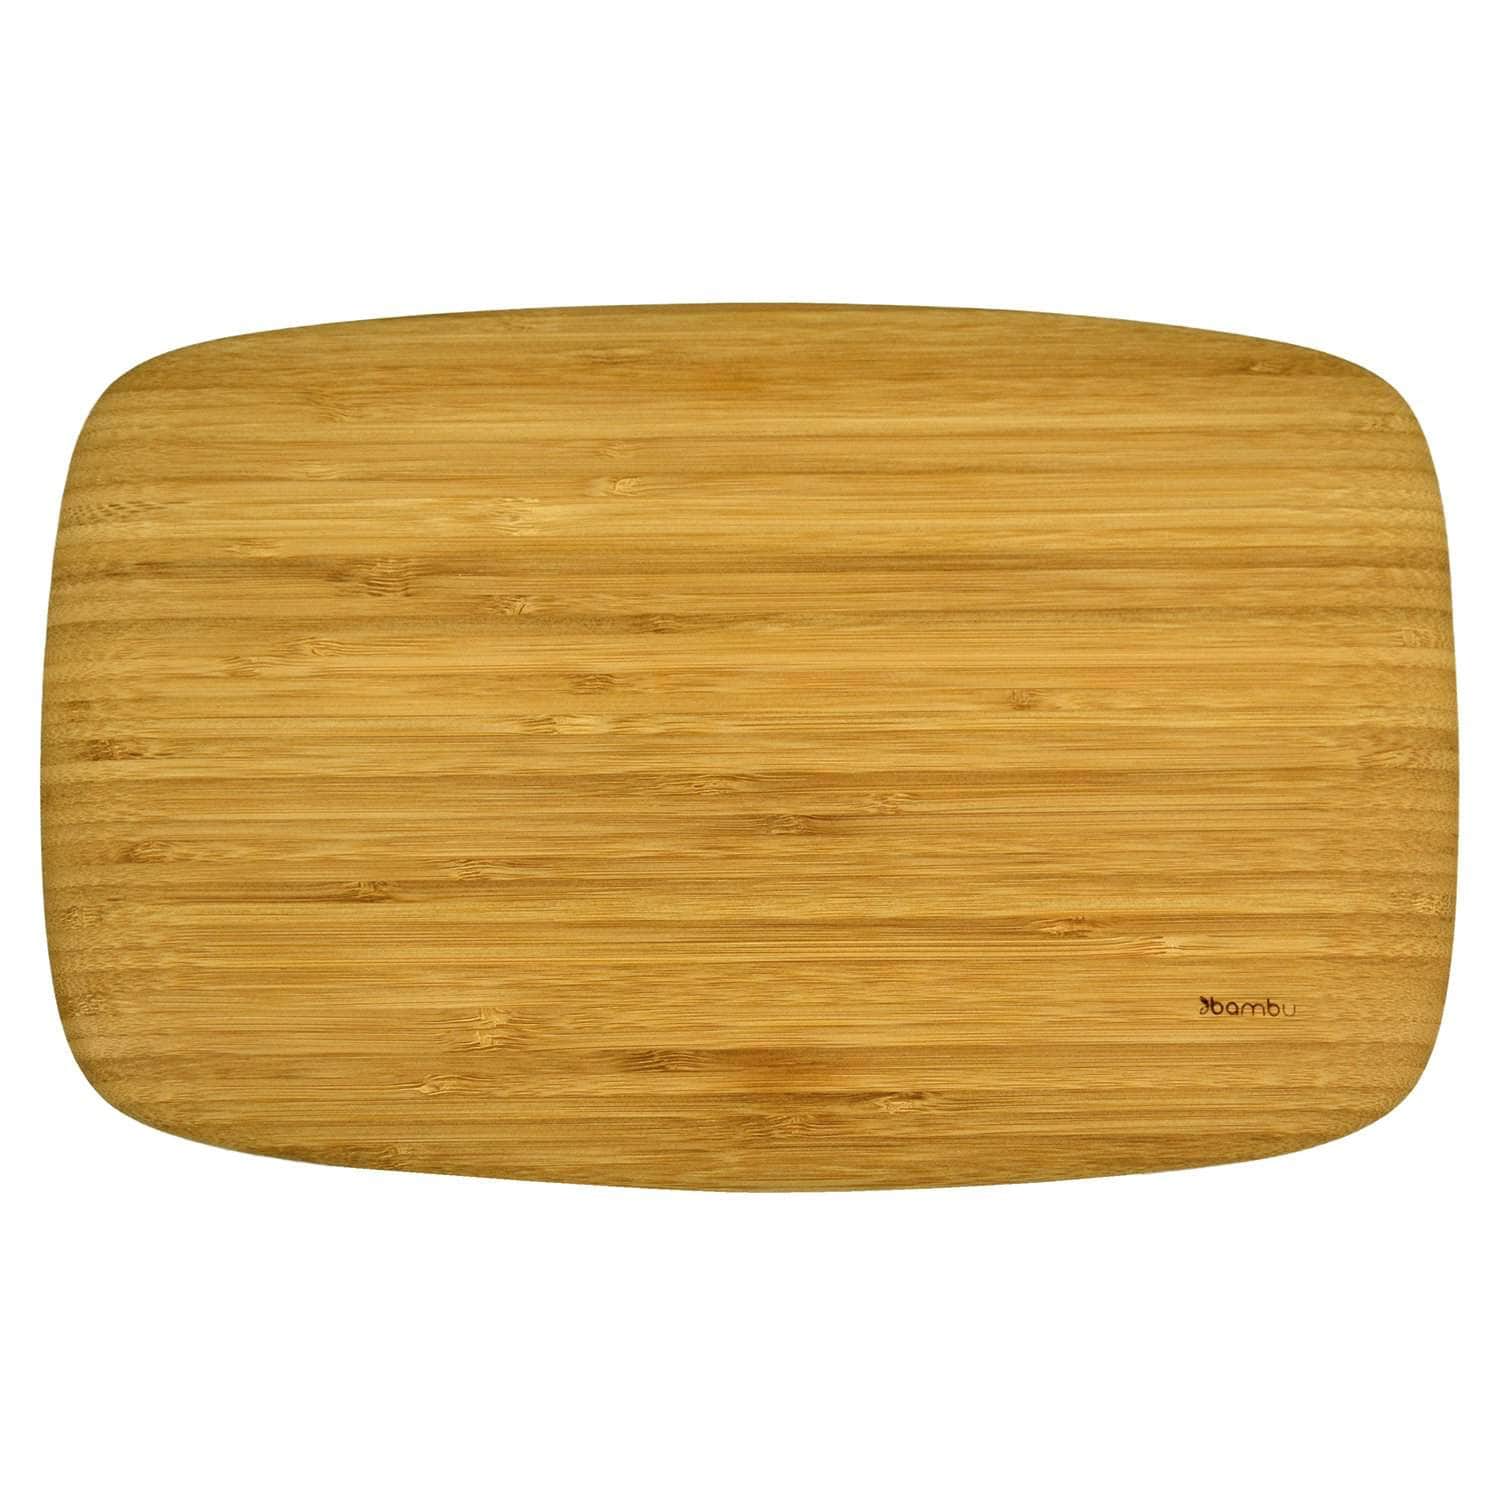 Undercut Series Bamboo Cutting Boards - in 2 sizes